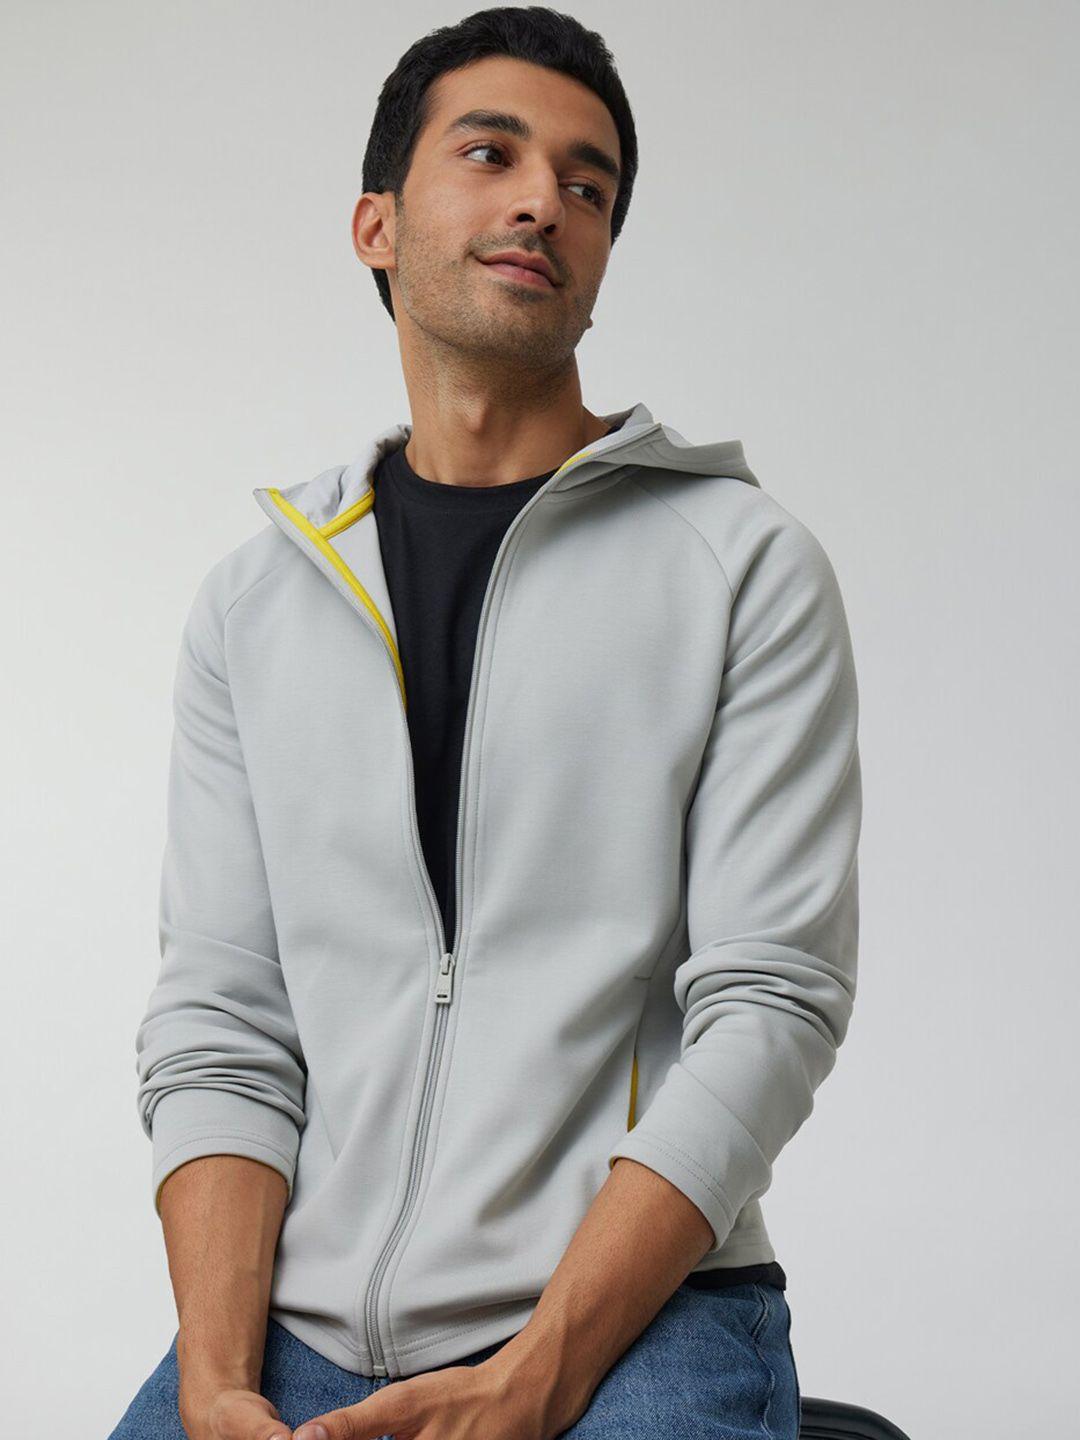 xyxx long sleeves hooded cotton front-open sweatshirt